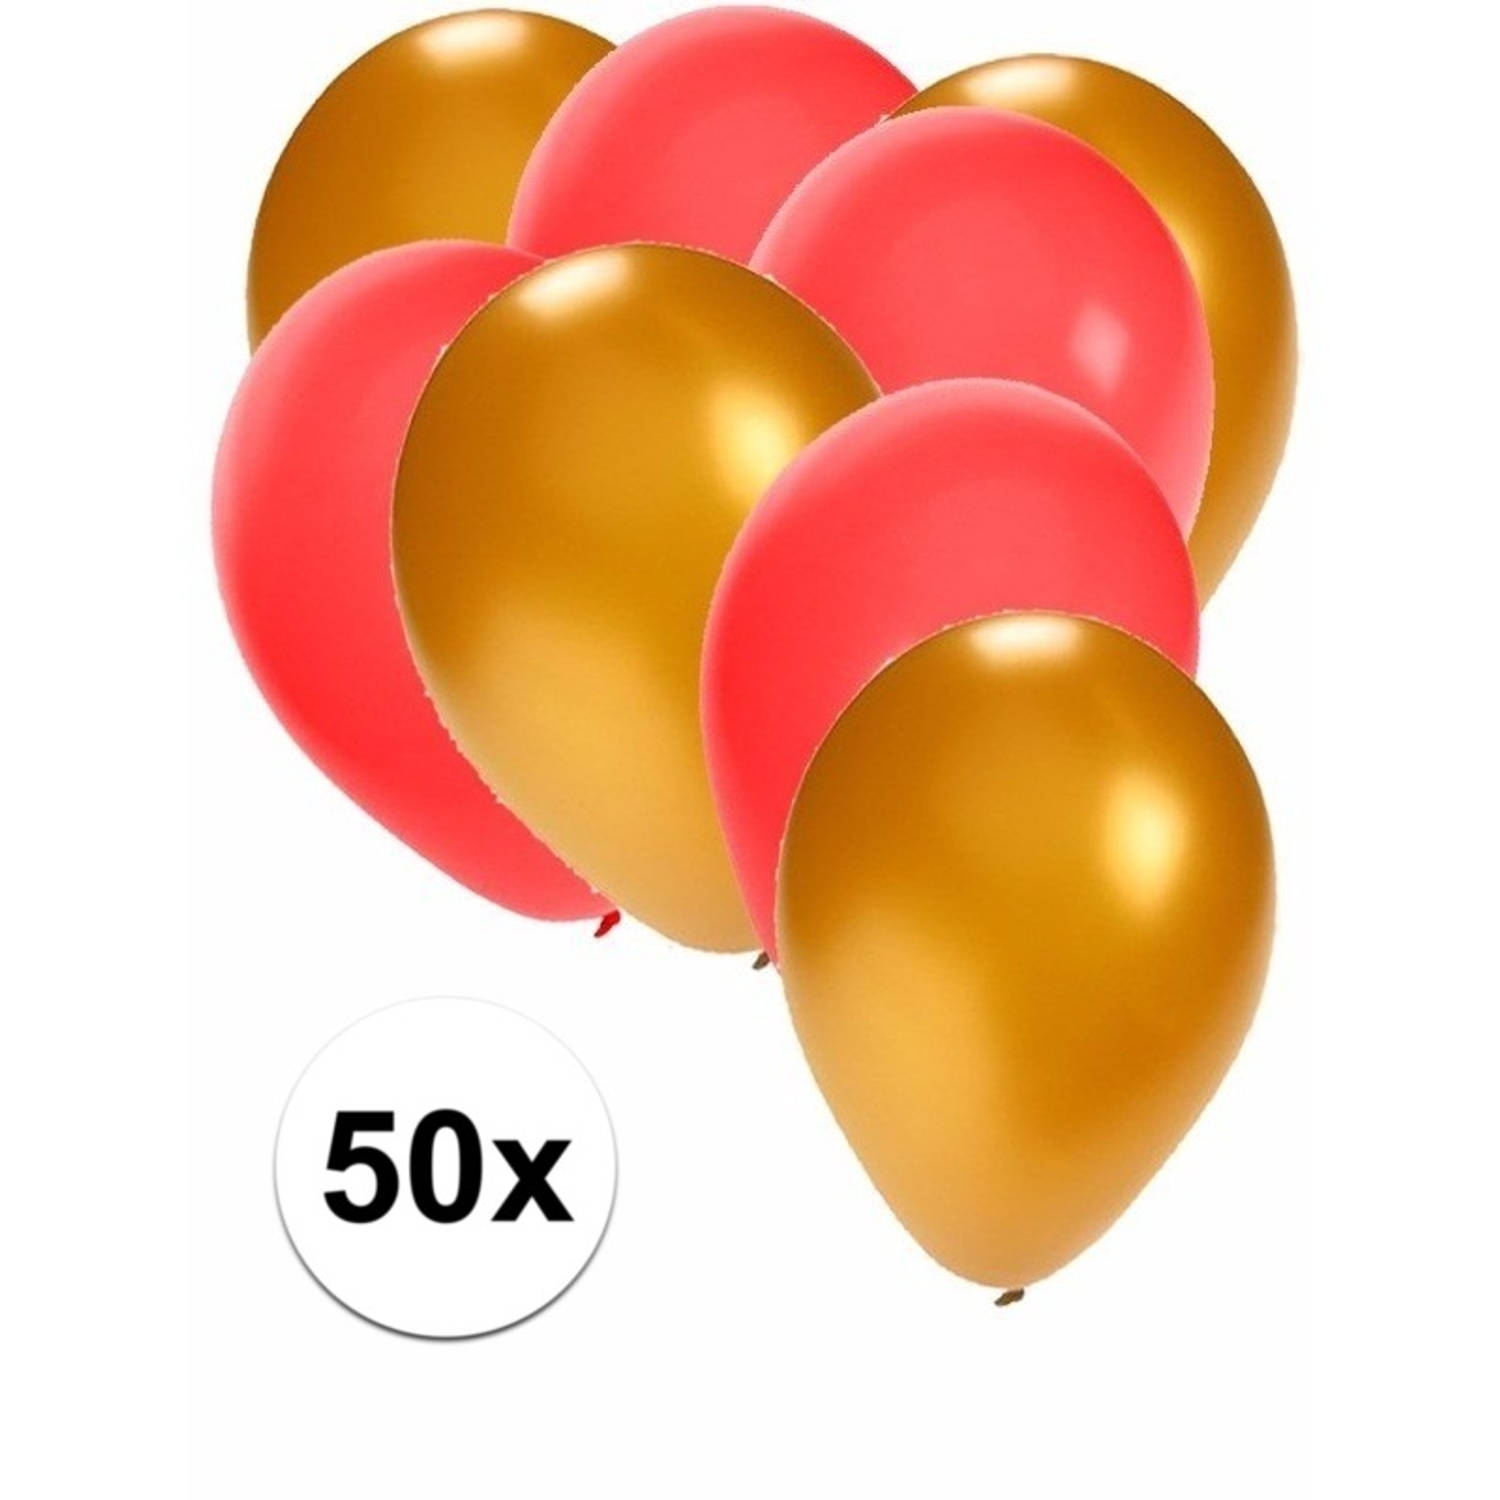 Redenaar fee buitenspiegel 50x gouden en rode ballonnen - Ballonnen | Blokker